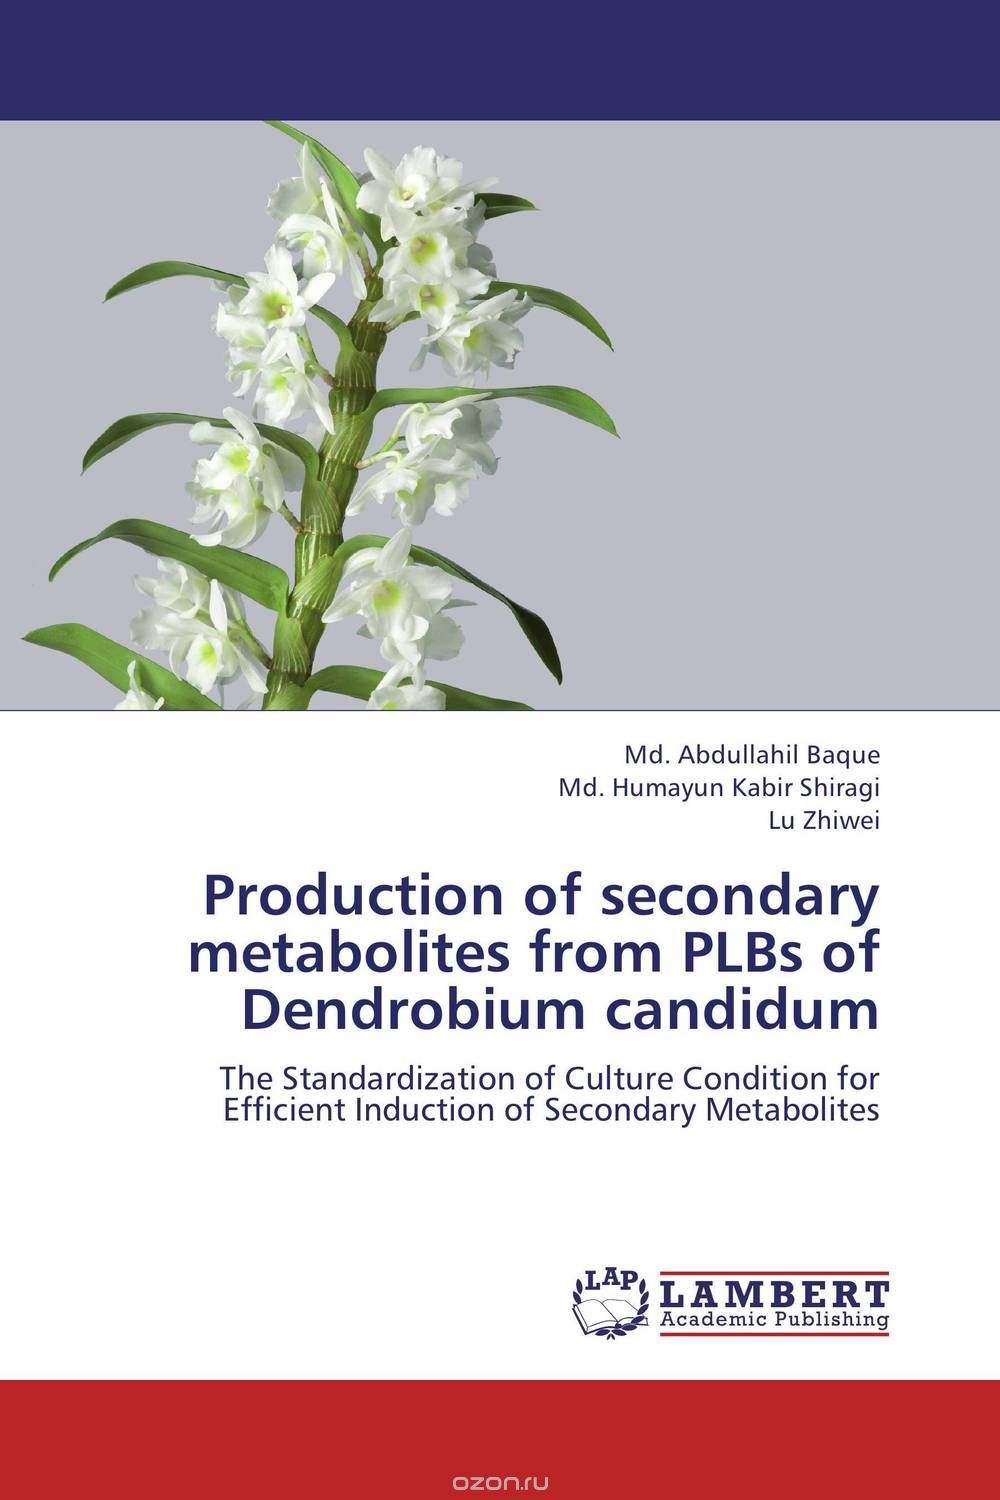 Скачать книгу "Production of secondary metabolites from PLBs of Dendrobium candidum"